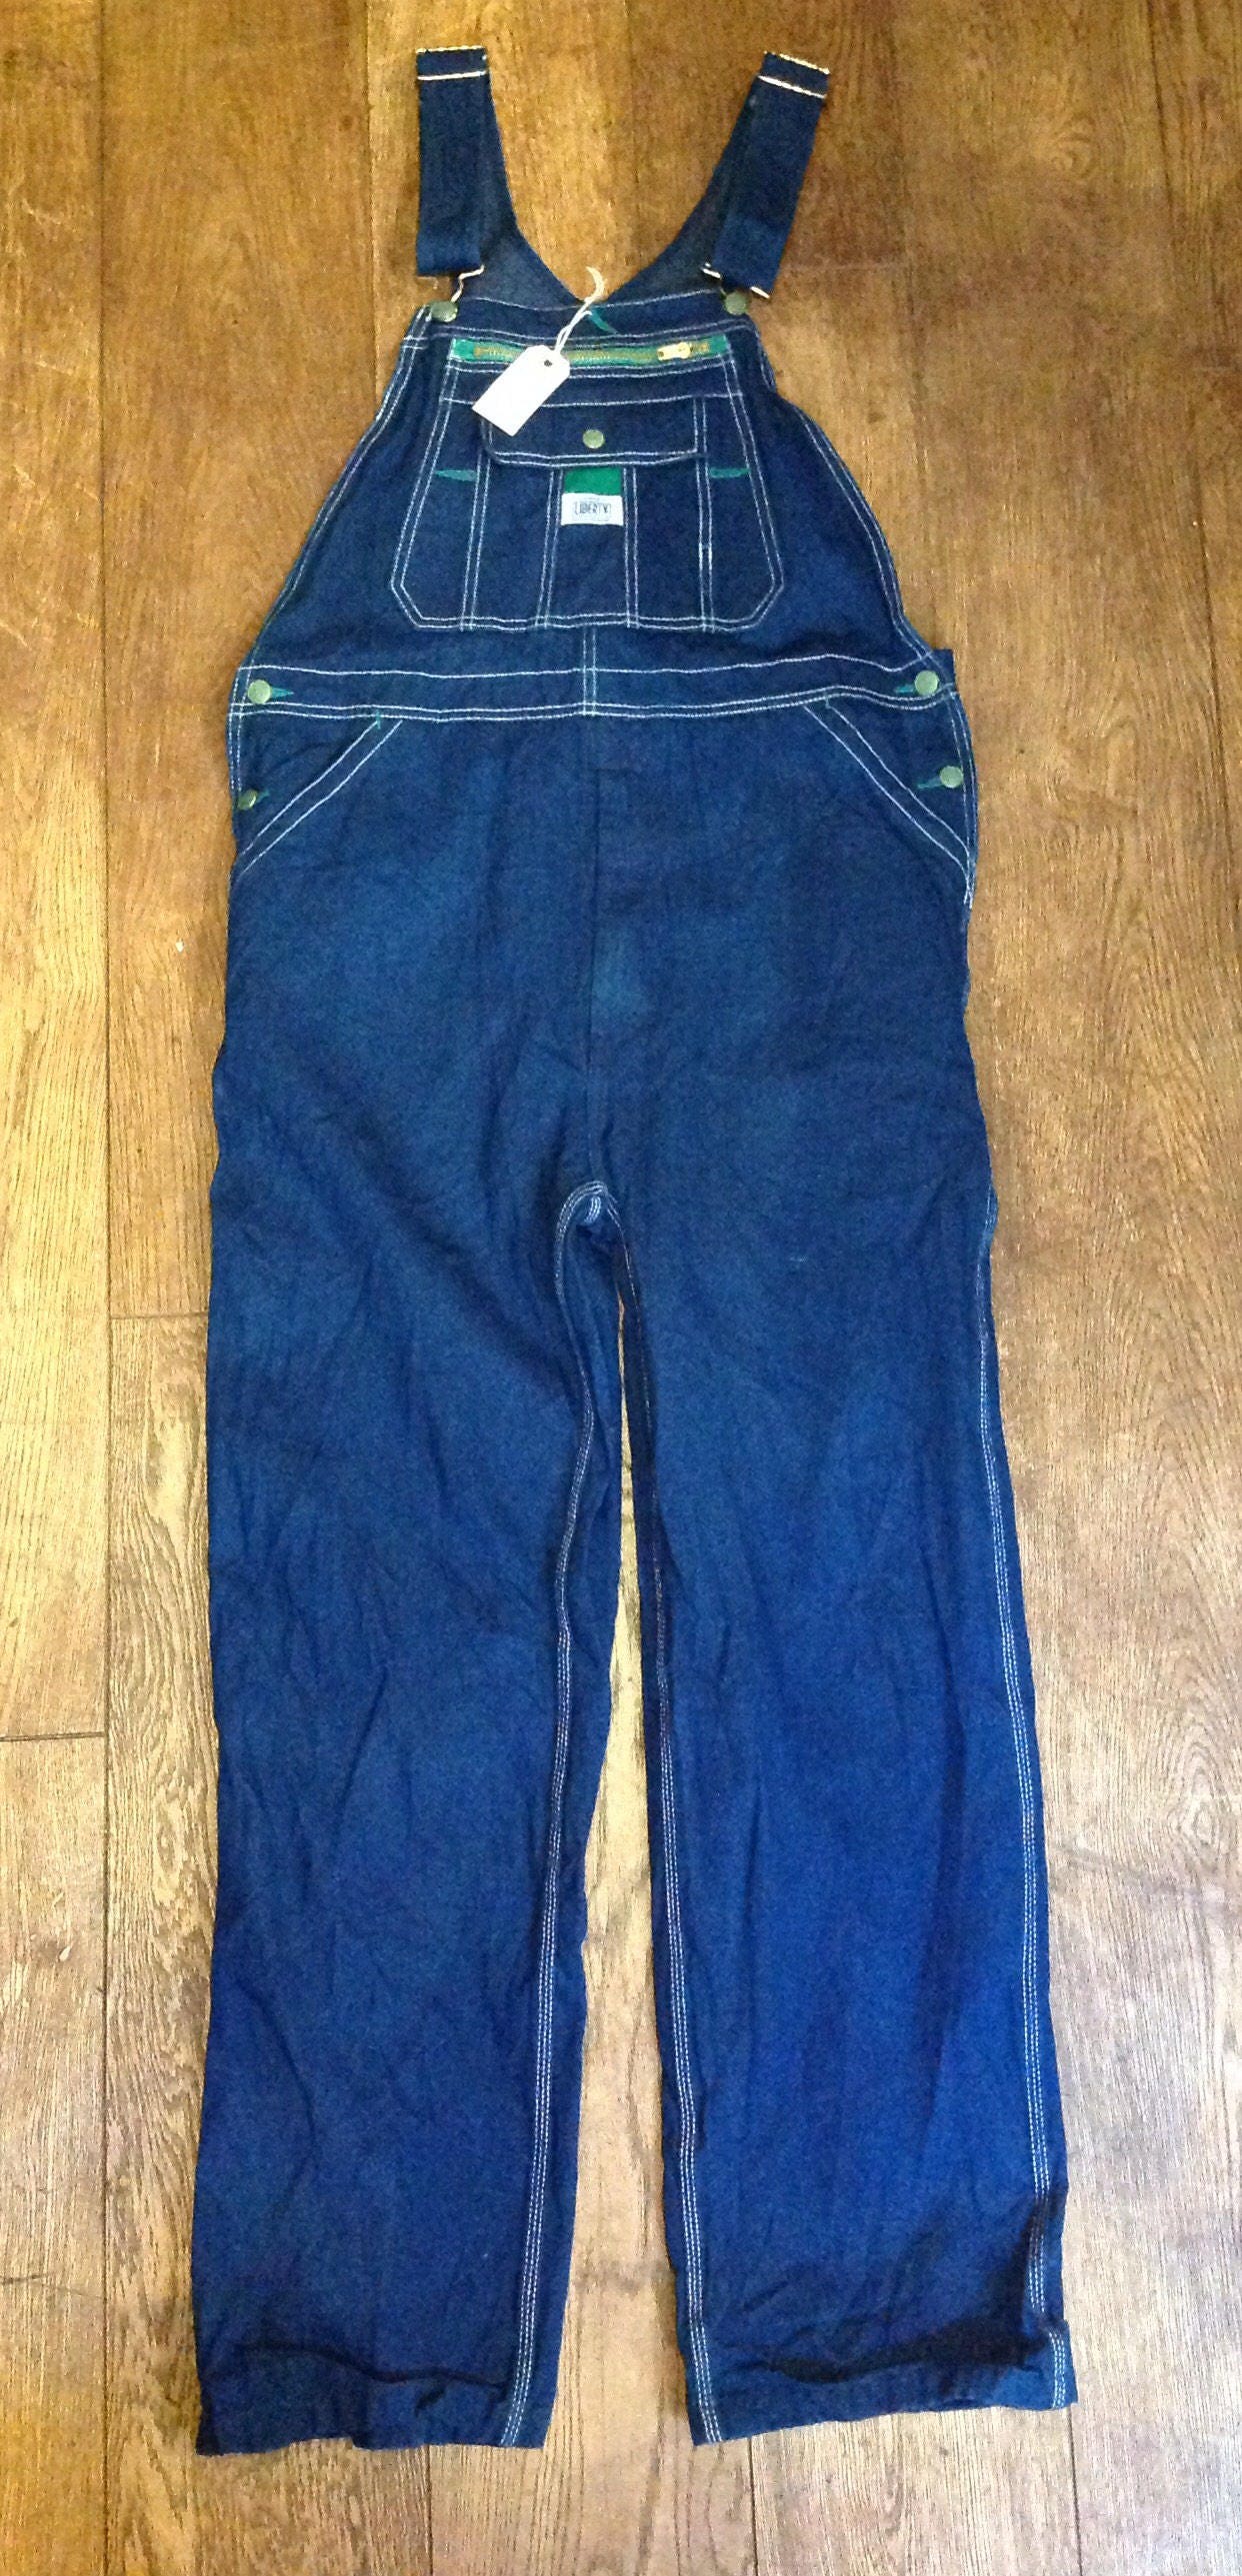 Vintage blue indigo denim Liberty overalls dungarees bib and brace ...